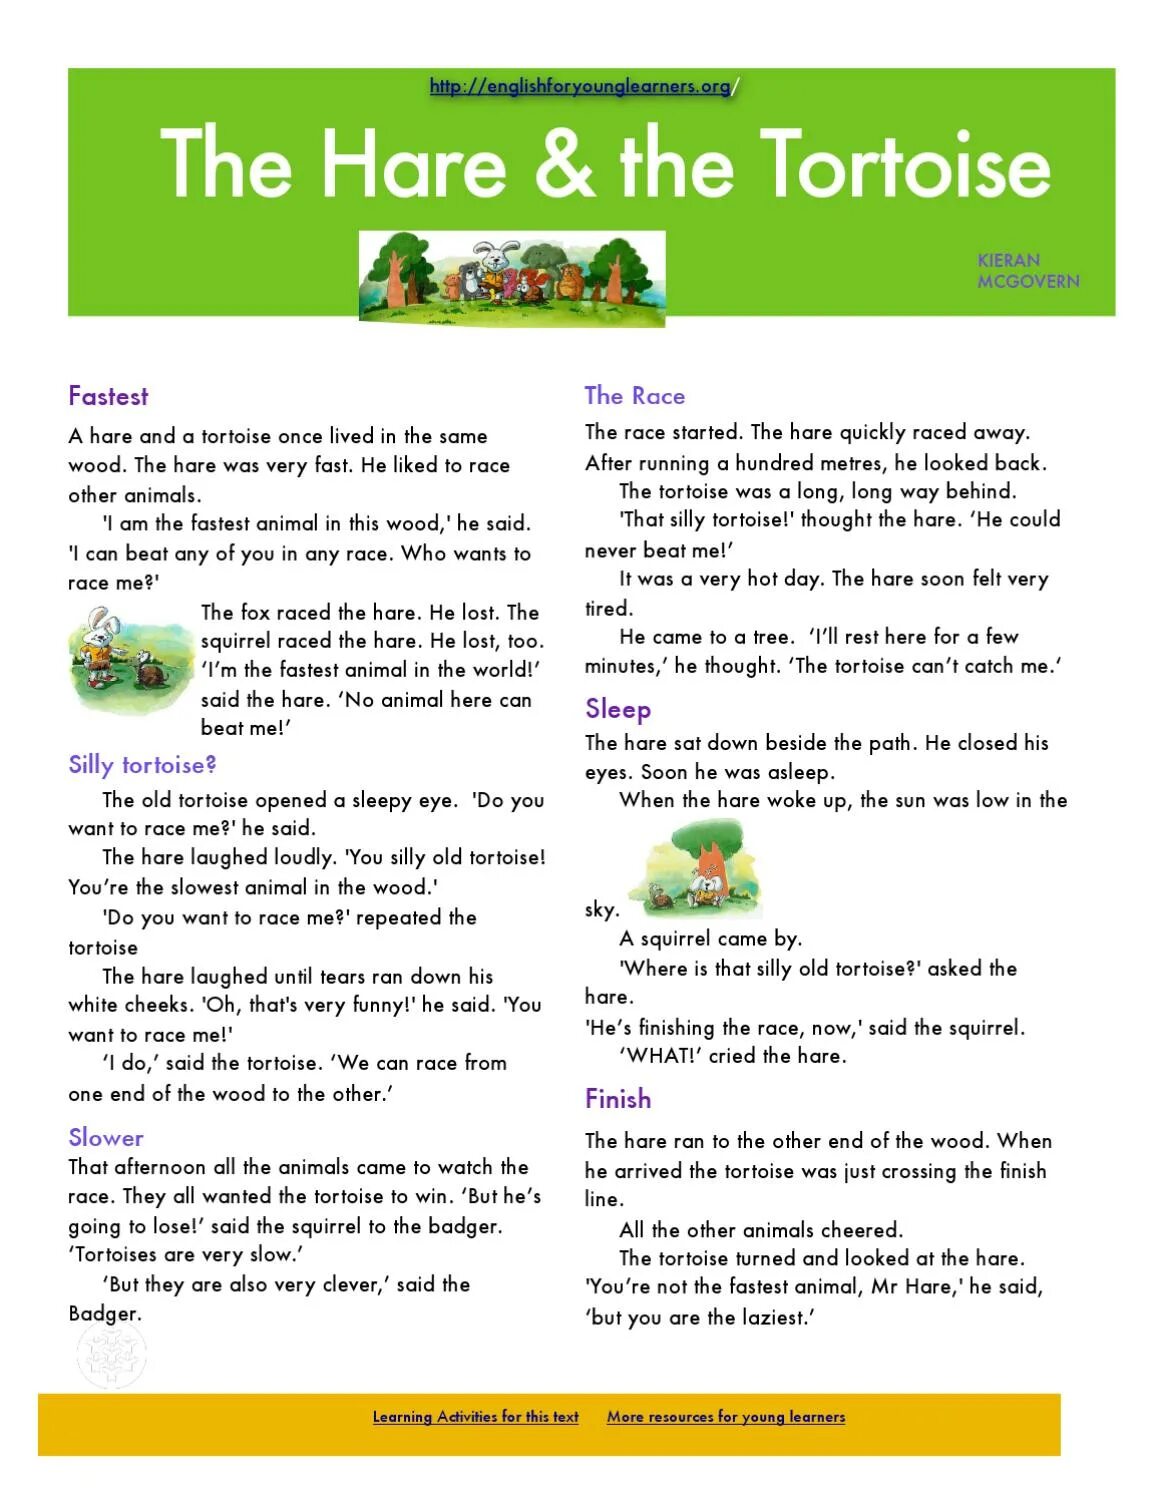 The Hare and the Tortoise. Спотлайт 4 the Hare and the Tortoise. The Hare and the Tortoise перевод. The Hare and the Tortoise текст. Fast hare перевод